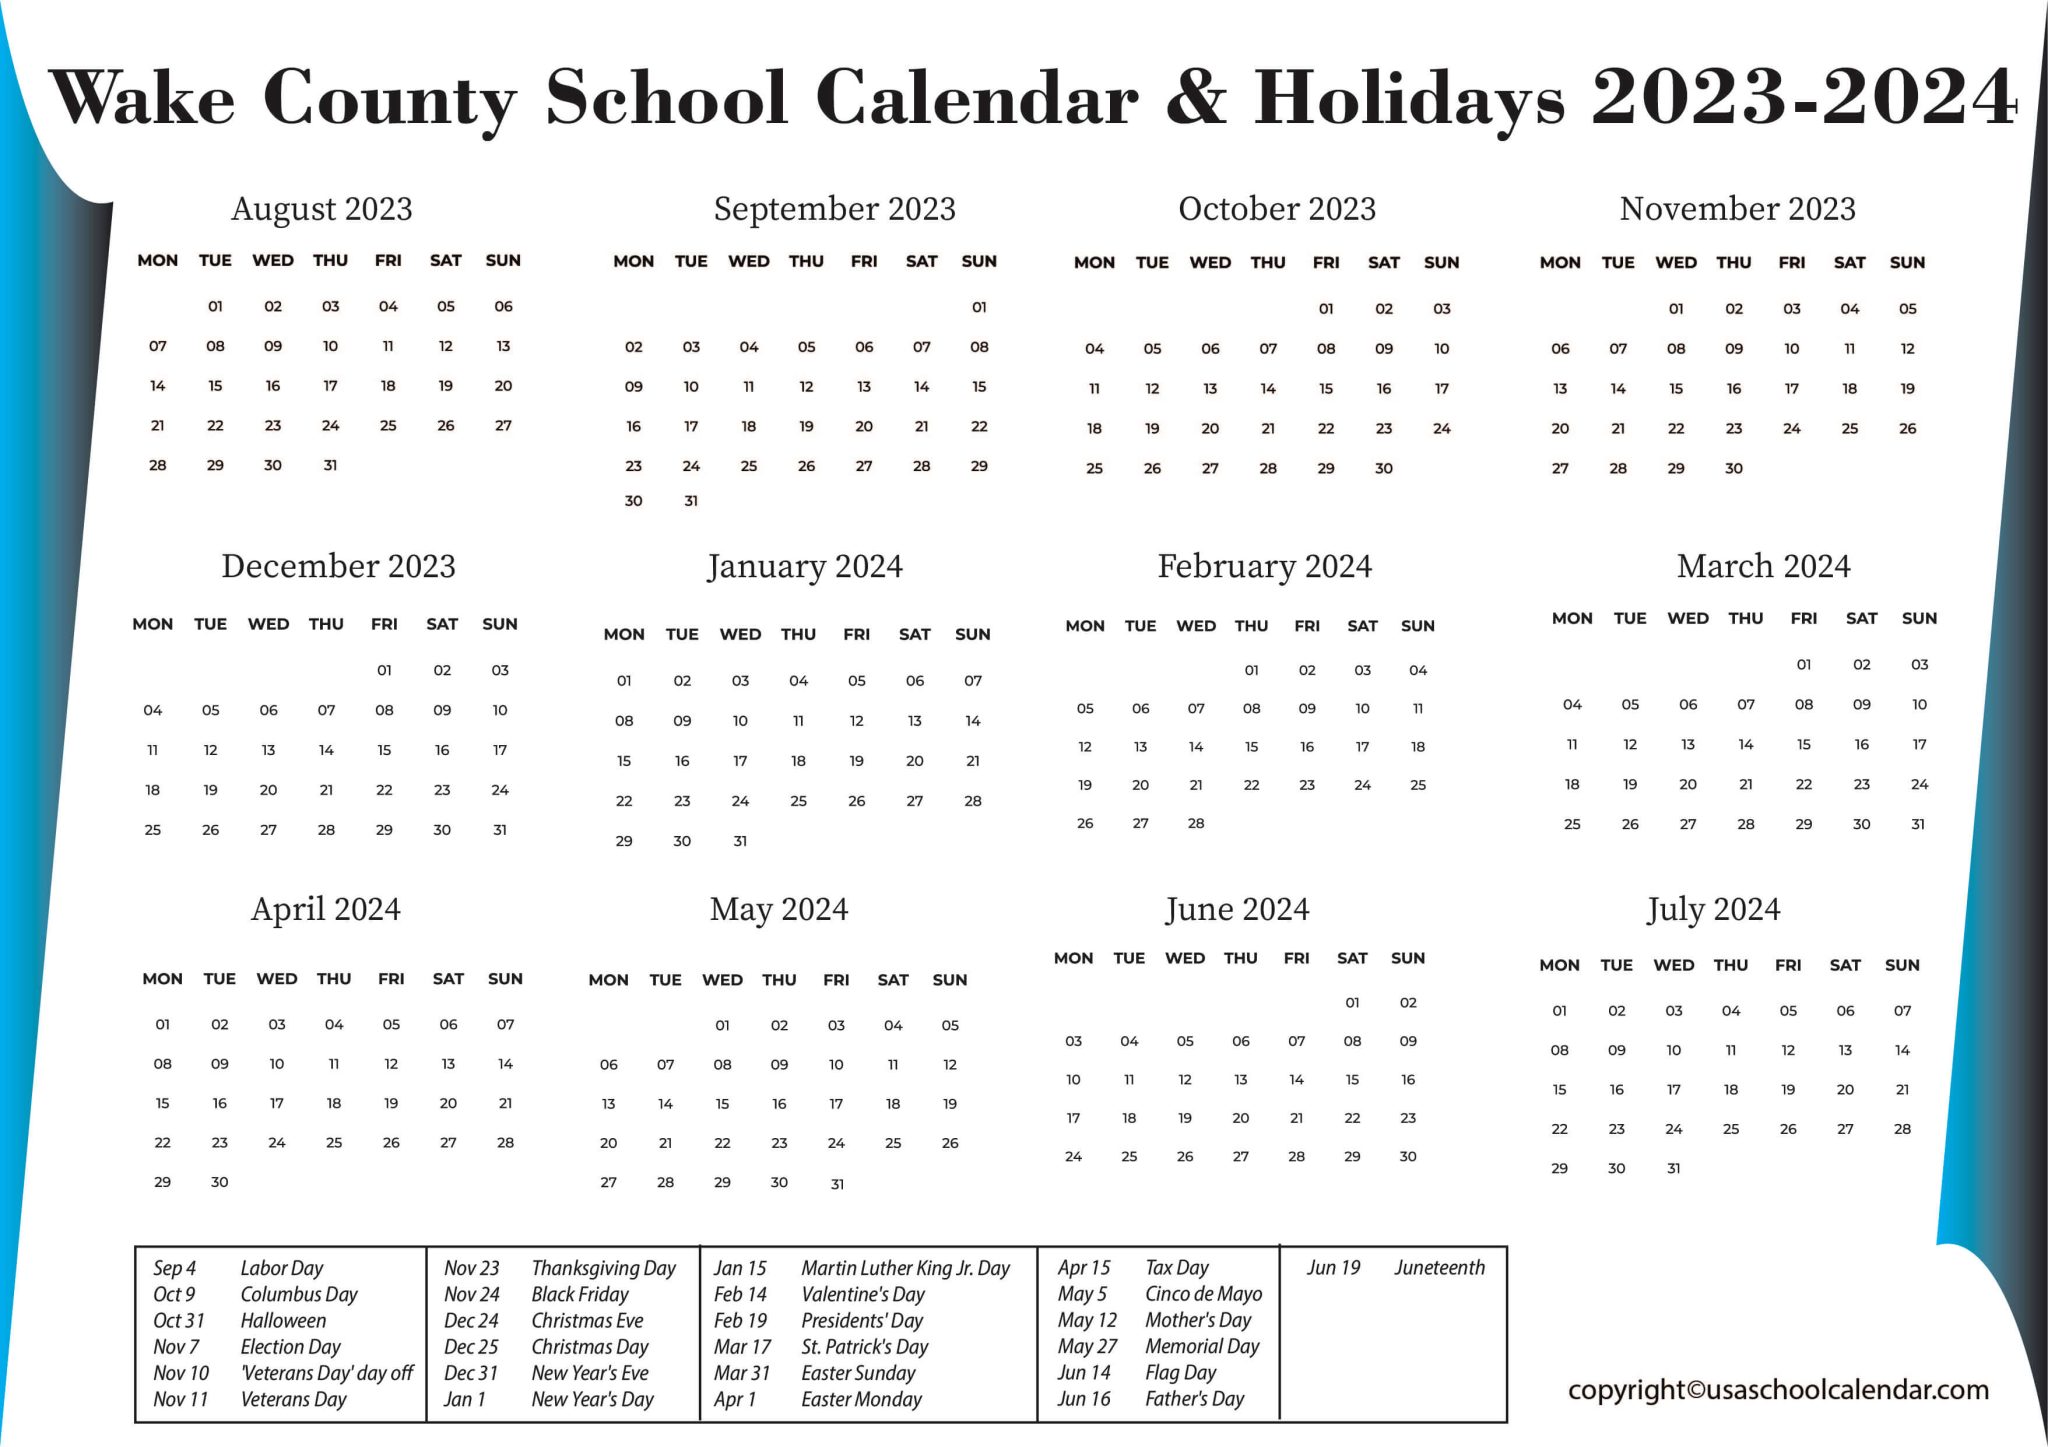 Wake County School Calendar & Holidays 2023-2024